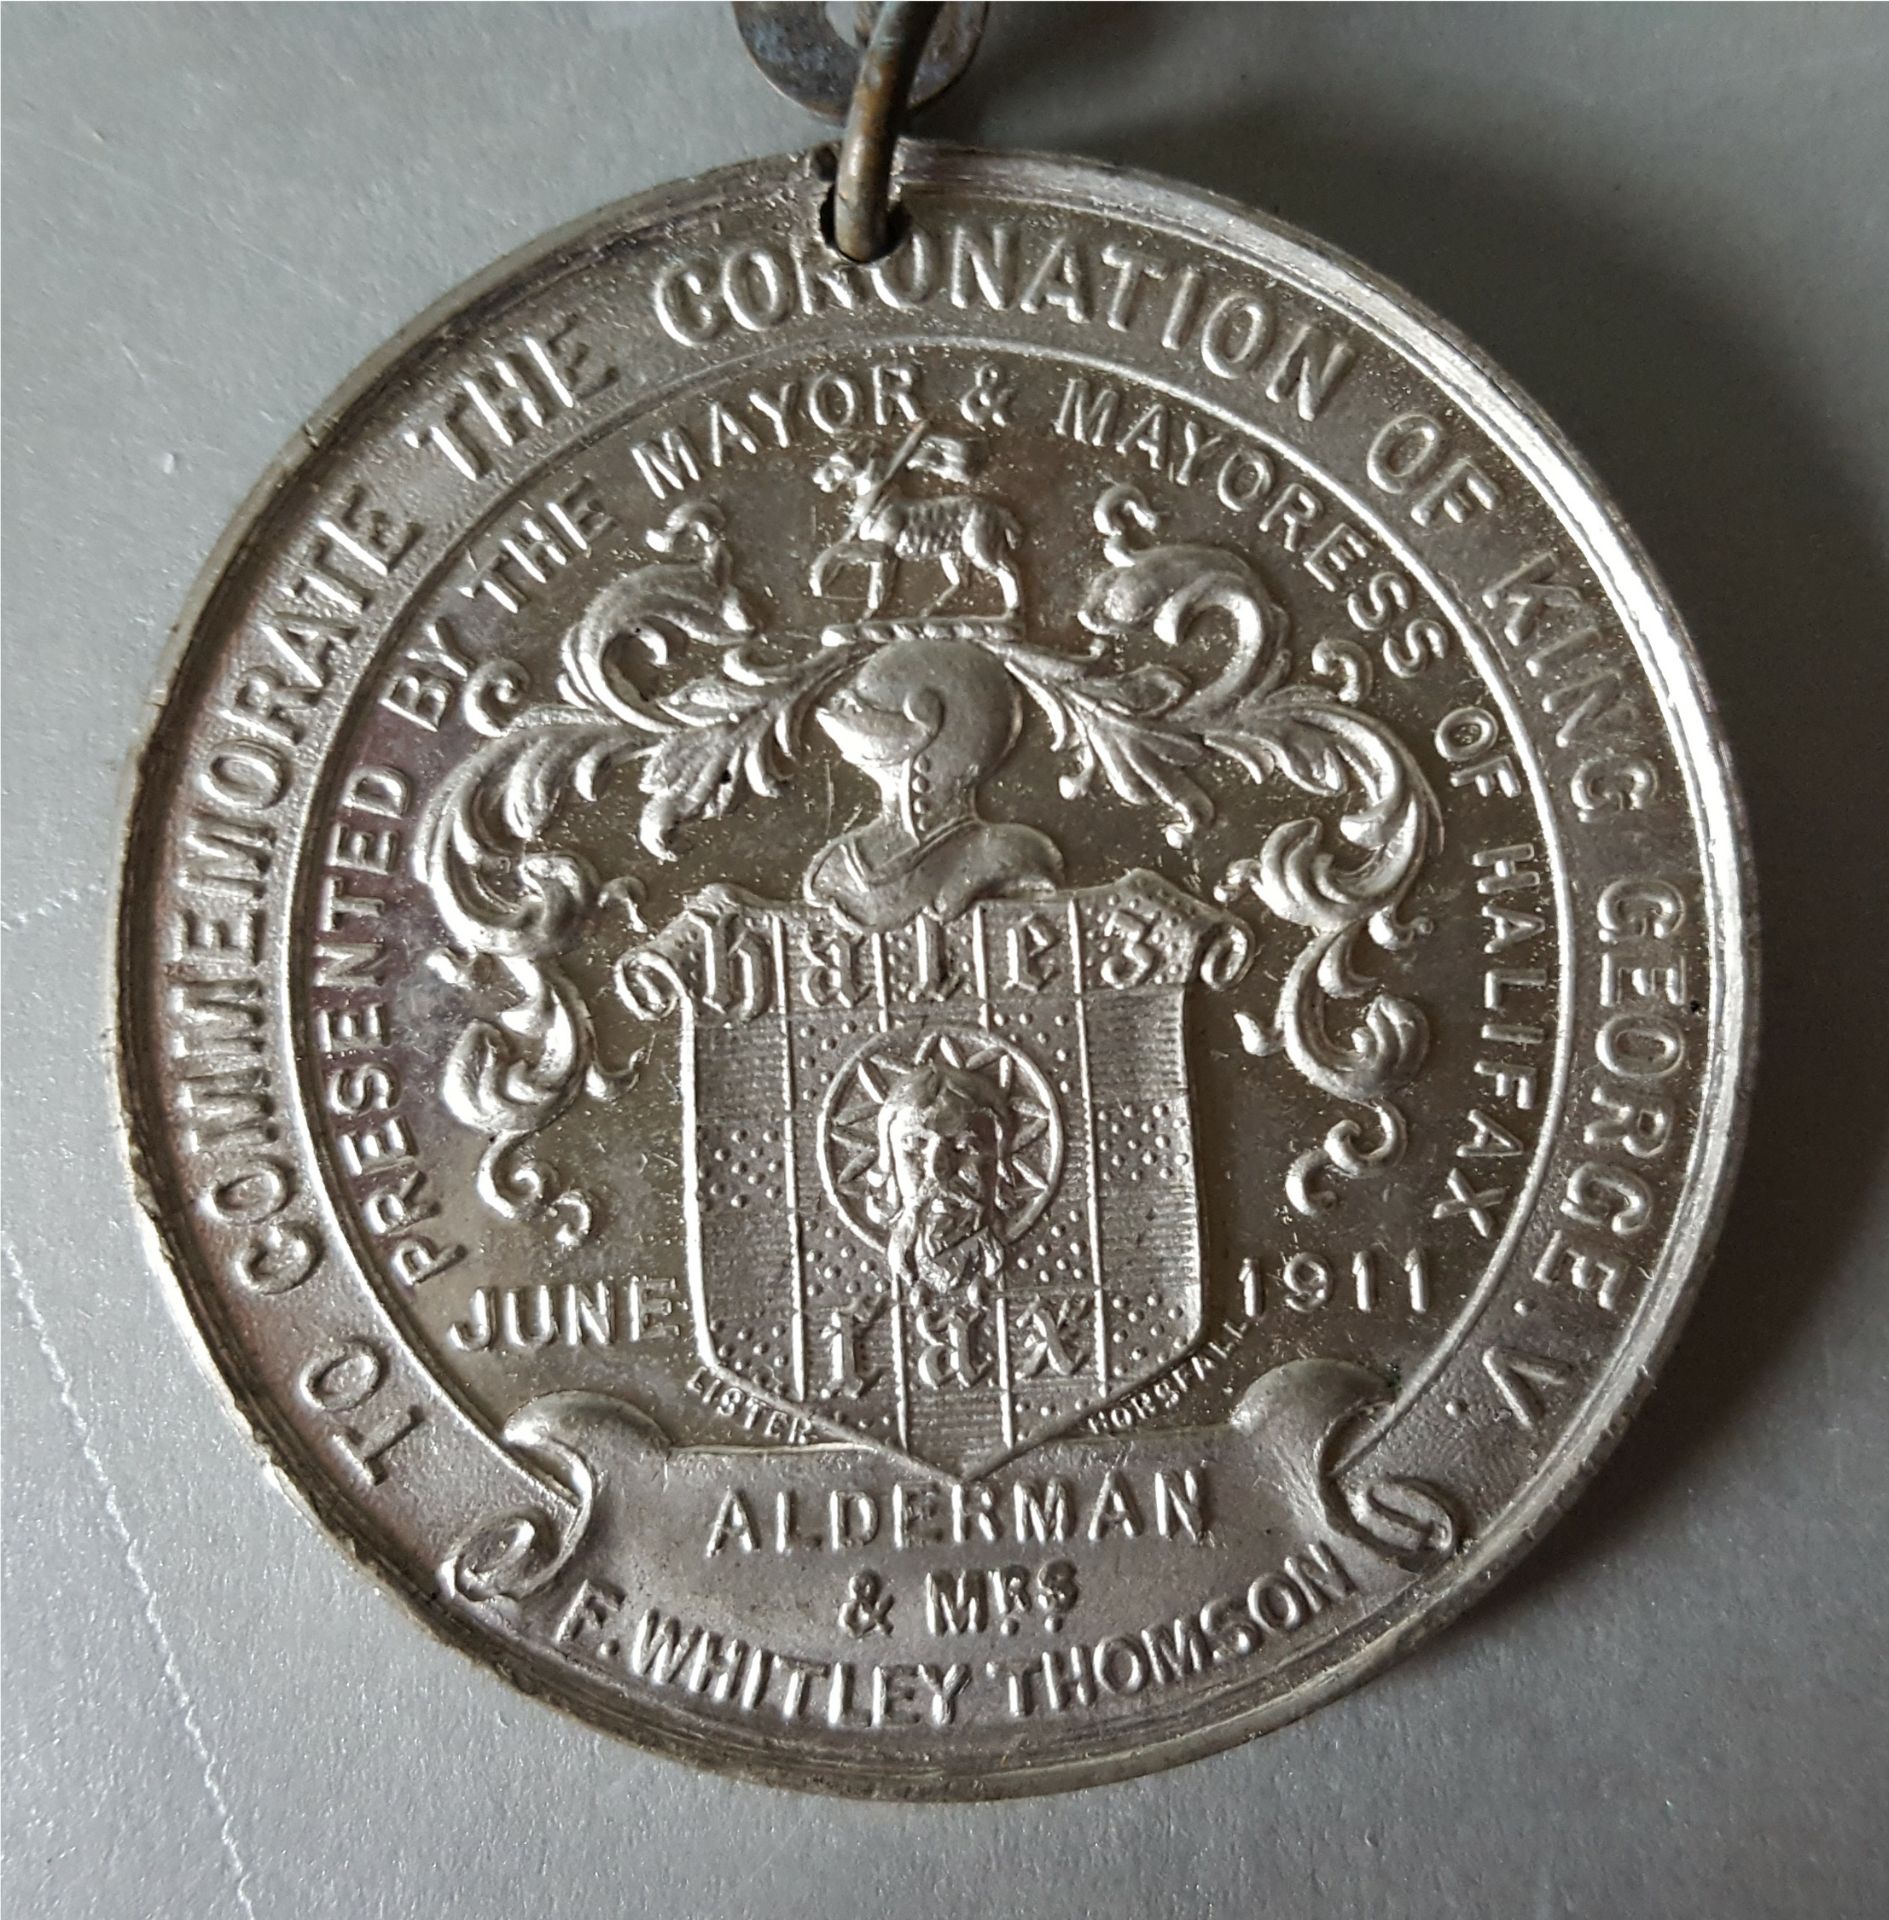 Vintage Medals Commemorative Coronation of King George V 1911 & King George VI 1937 - Image 4 of 4